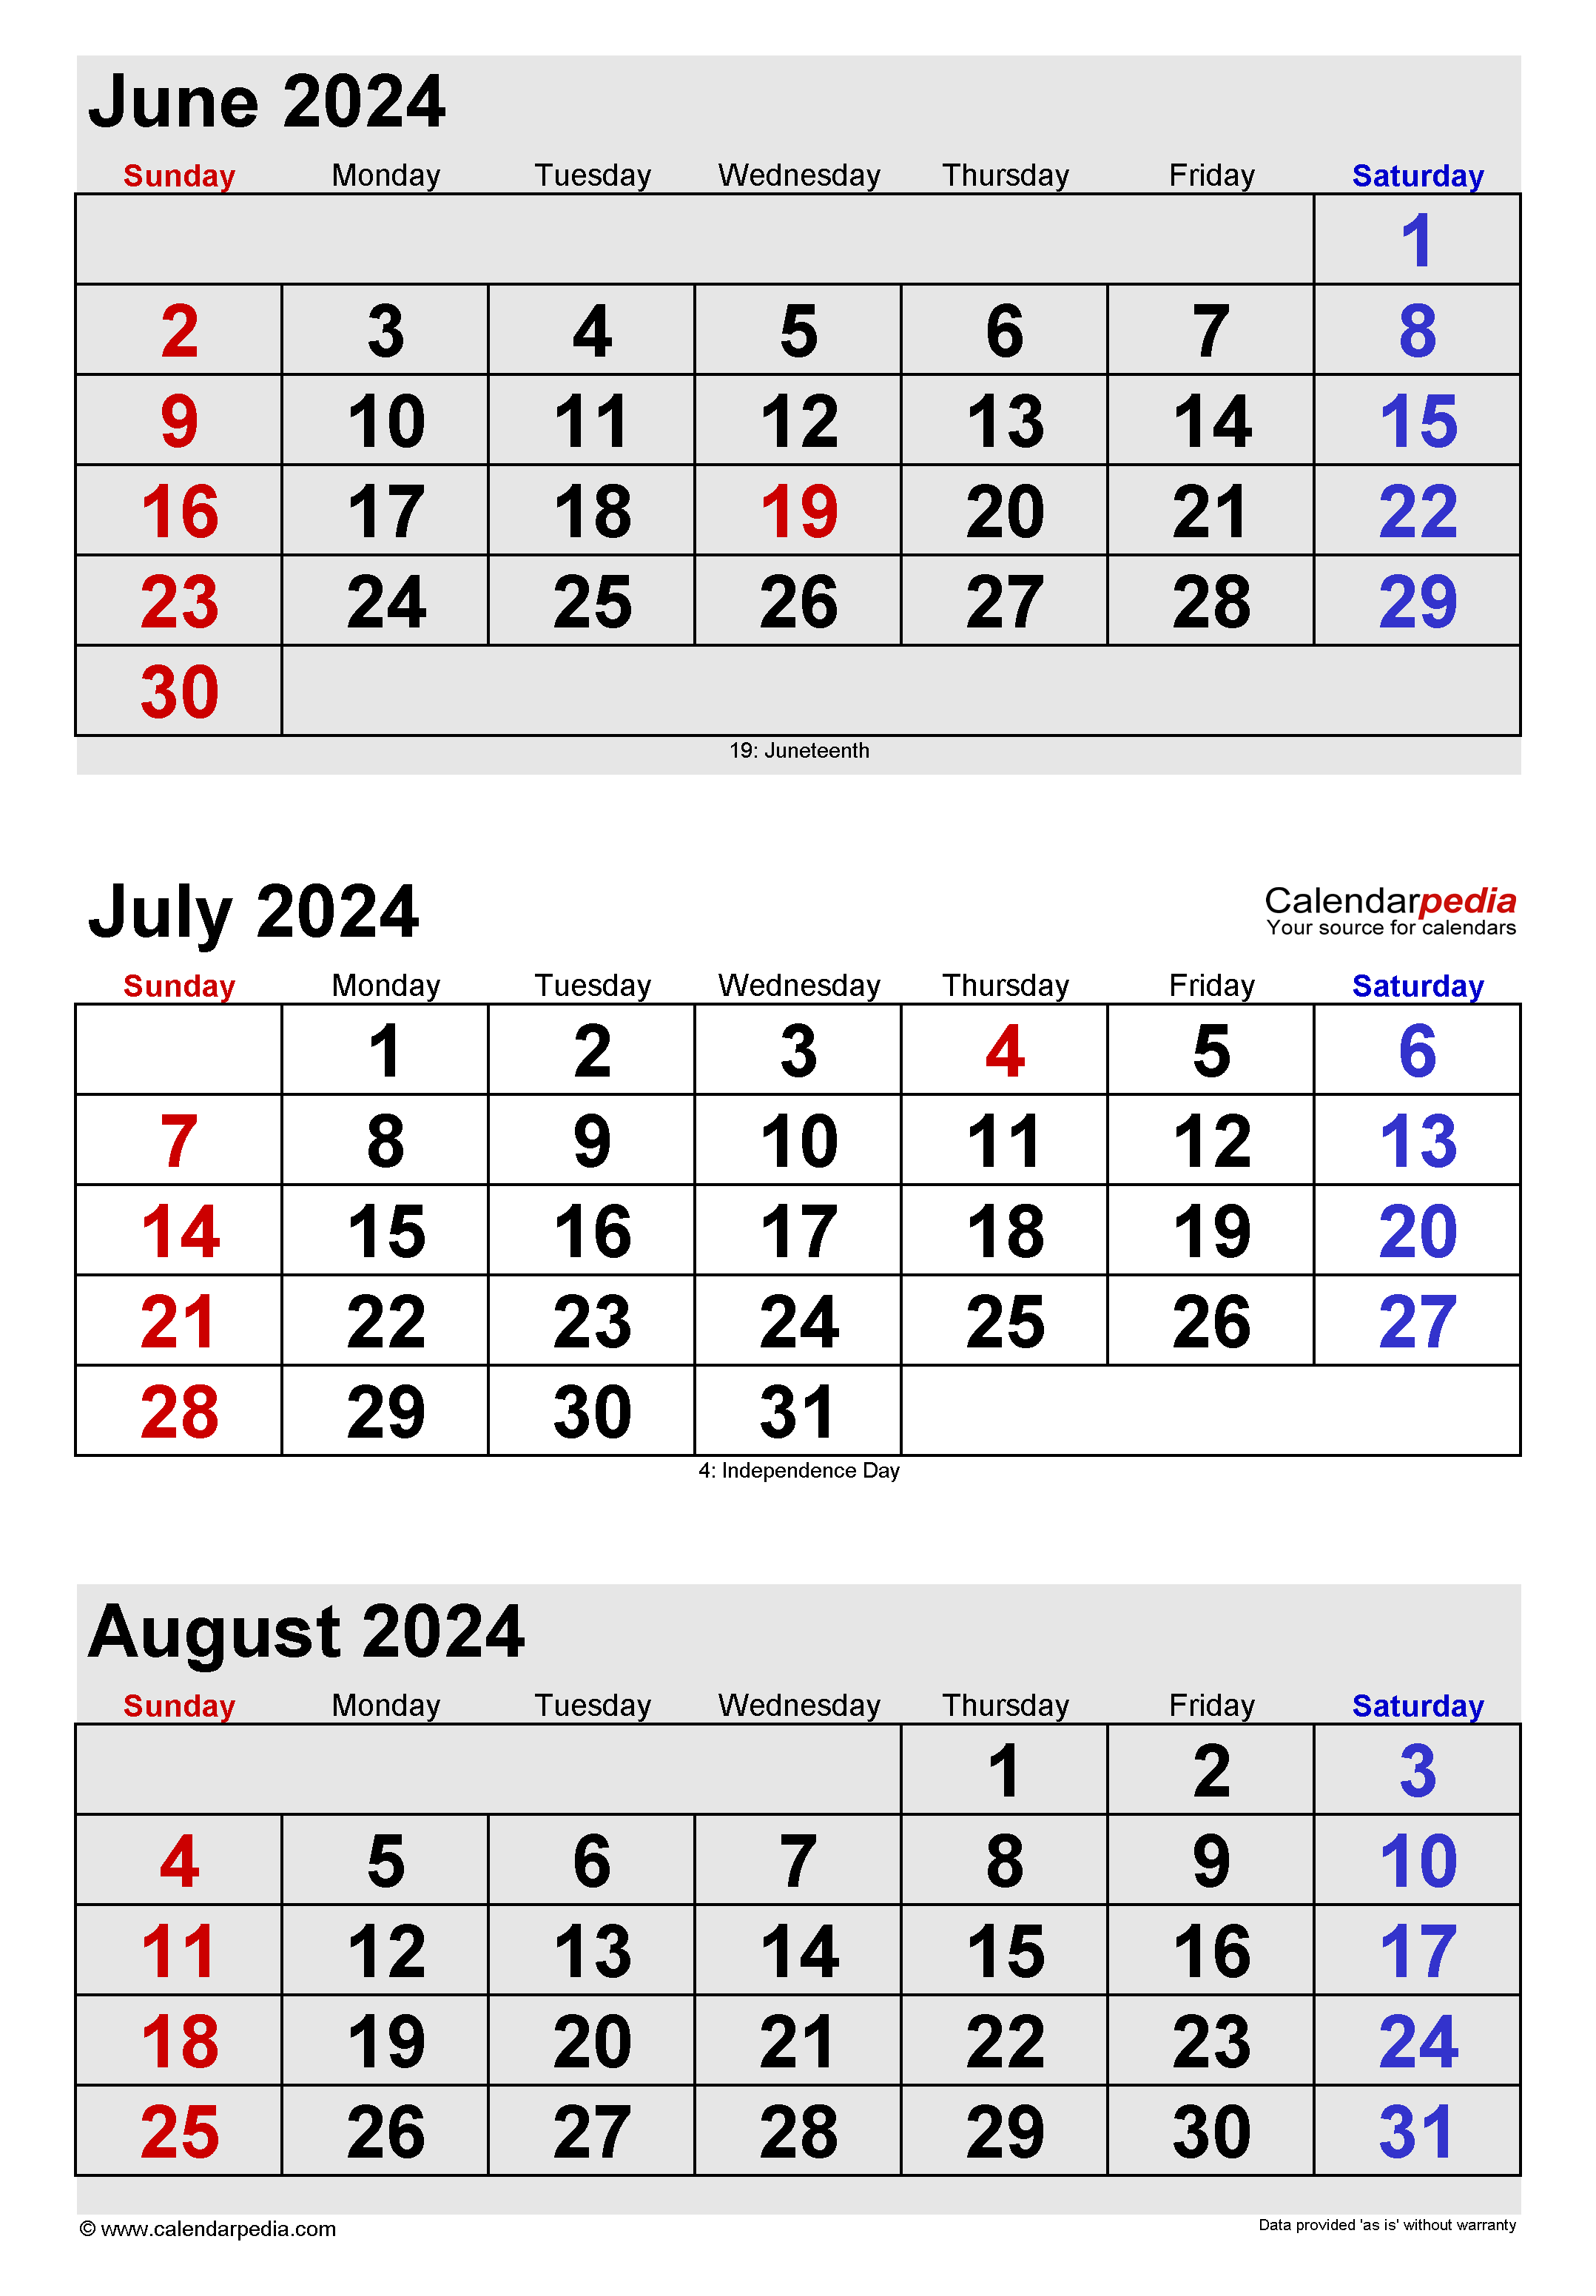 August 2024 July 2024 Calendar Printable 2024 CALENDAR PRINTABLE - Free Printable 2024 Calendar July